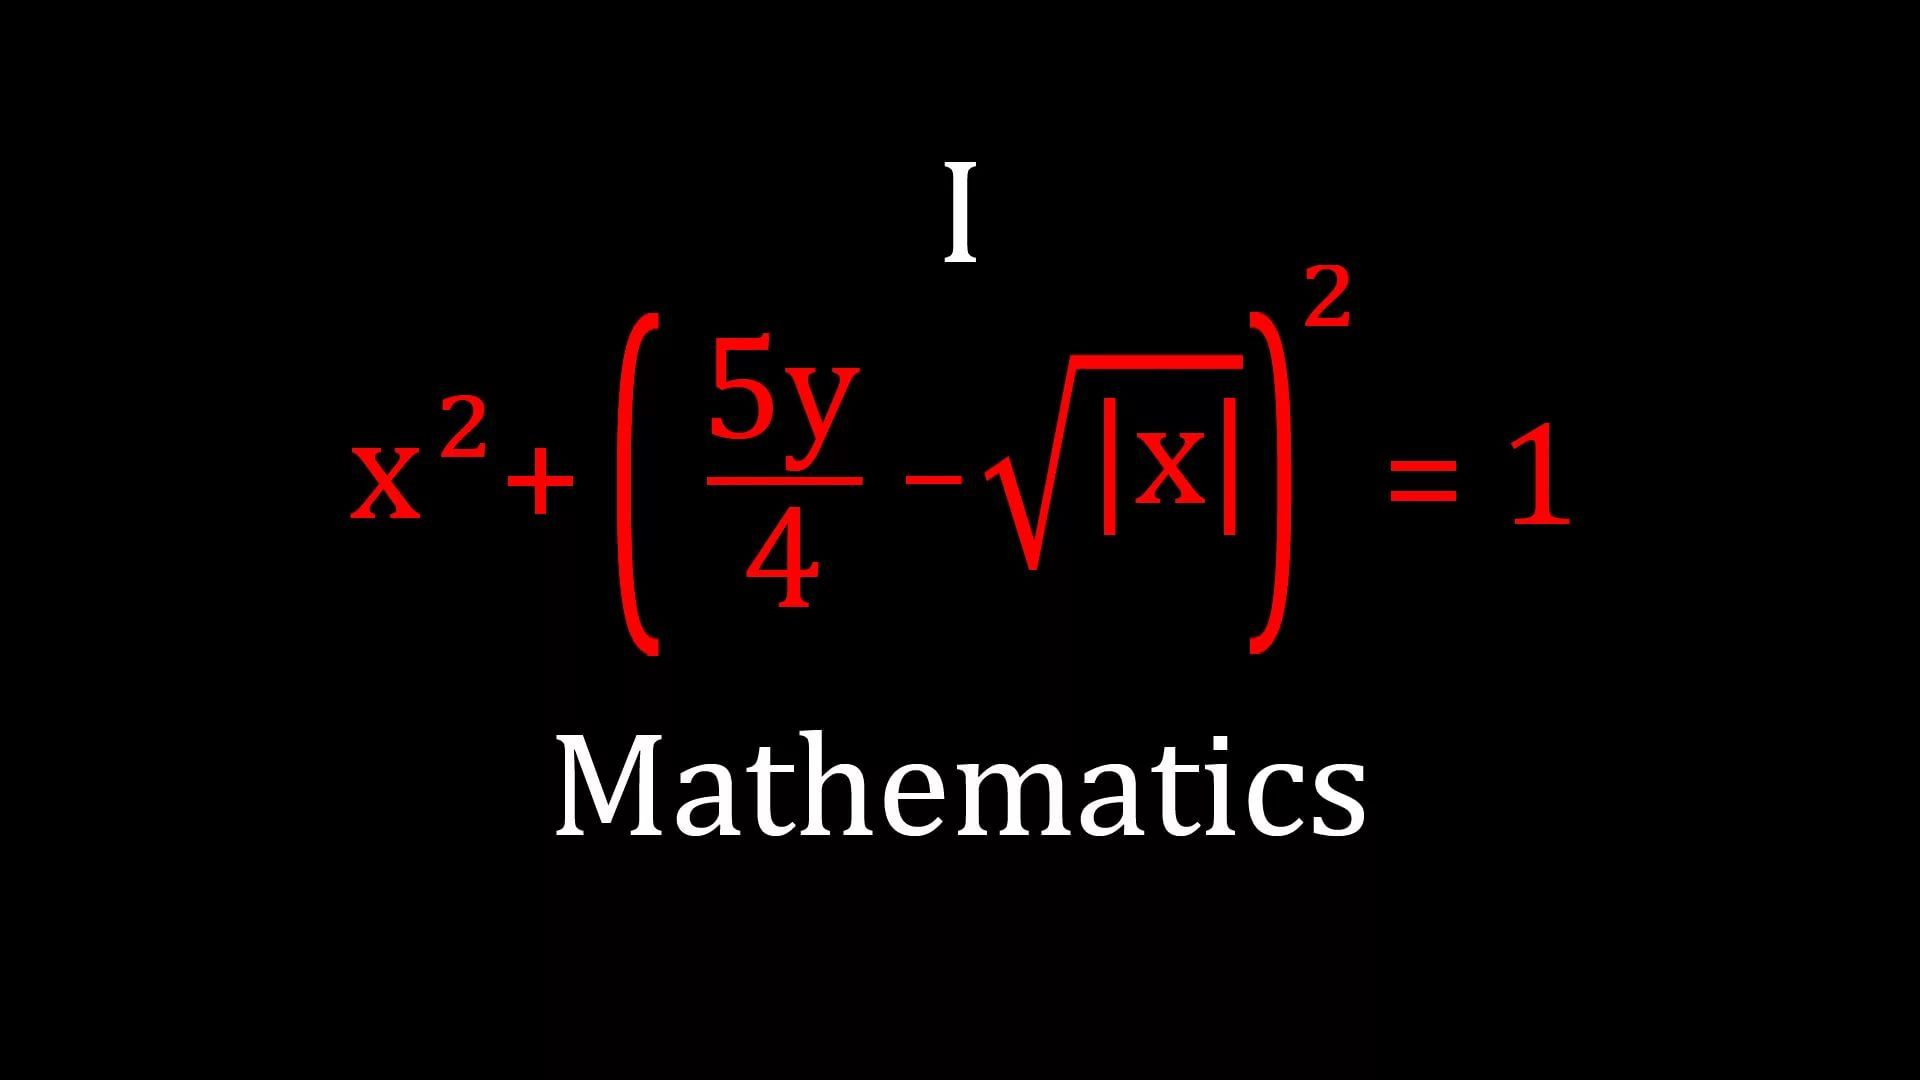 Math Equation wallpaper photo full hd